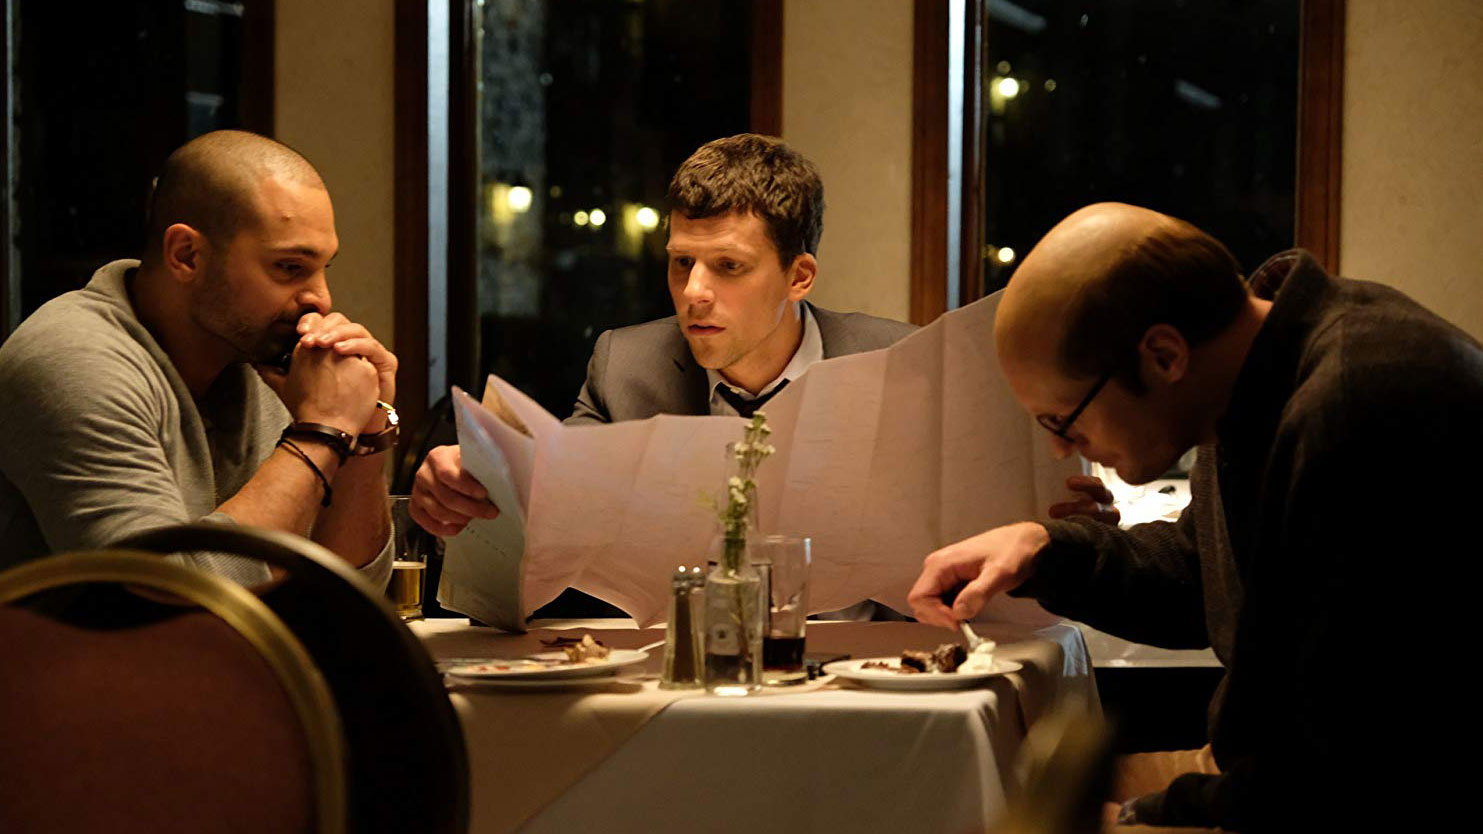 Jesse Eisenberg holds a menu at a restaurant table